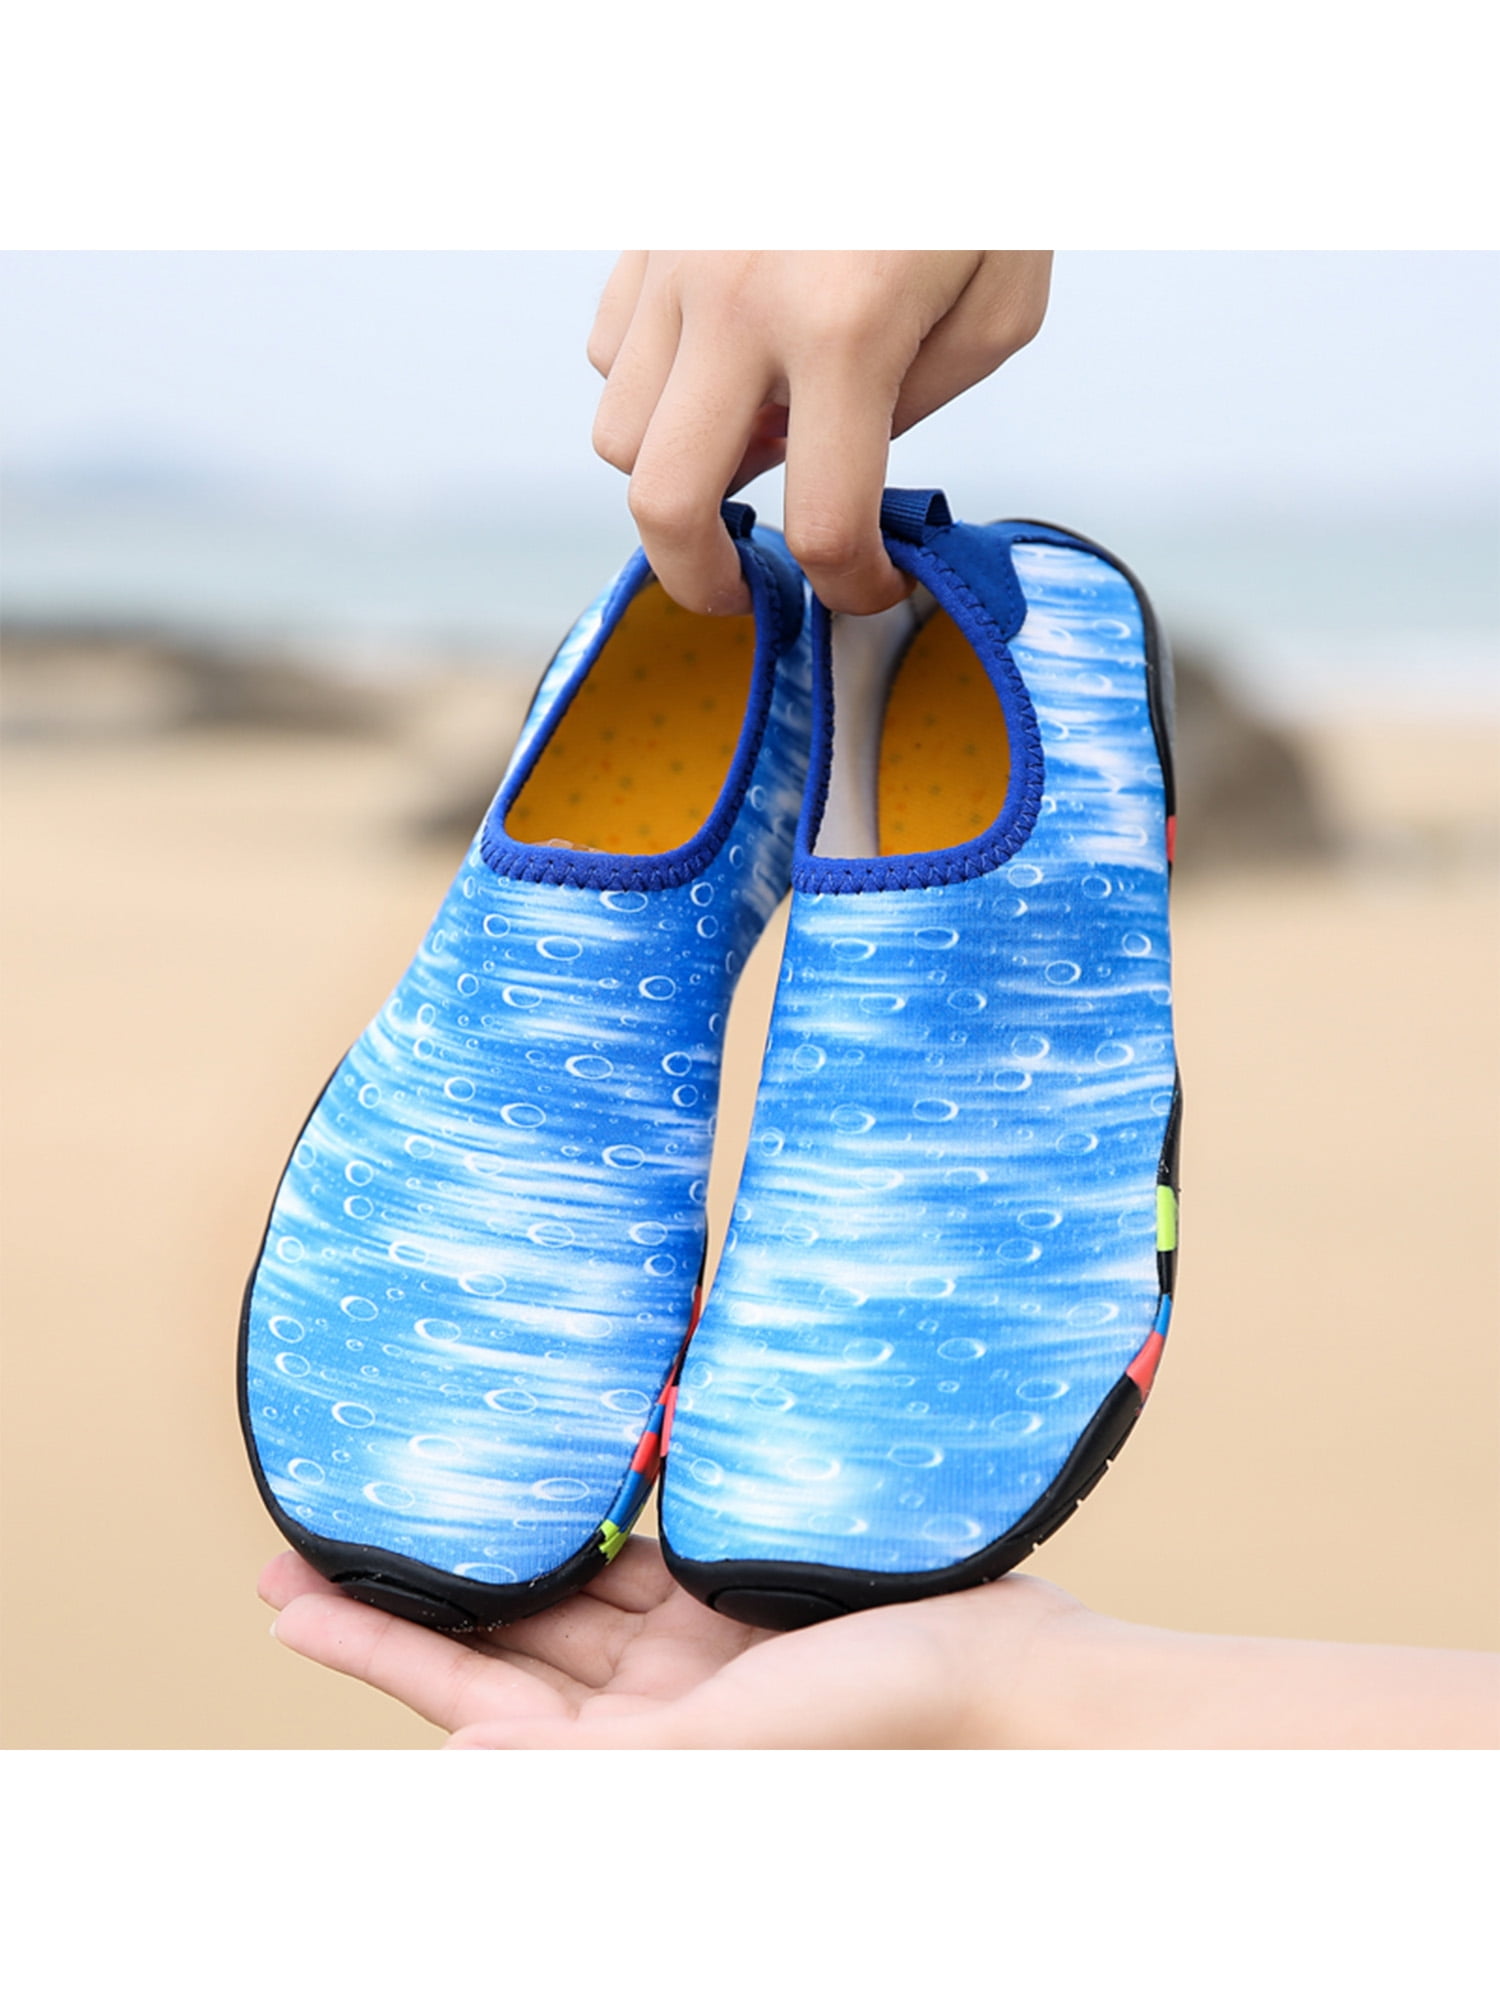 Details about   Mens Women Water Shoes Quick Dry Beach Swim Barefoot Aqua Socks Diving Surf US 